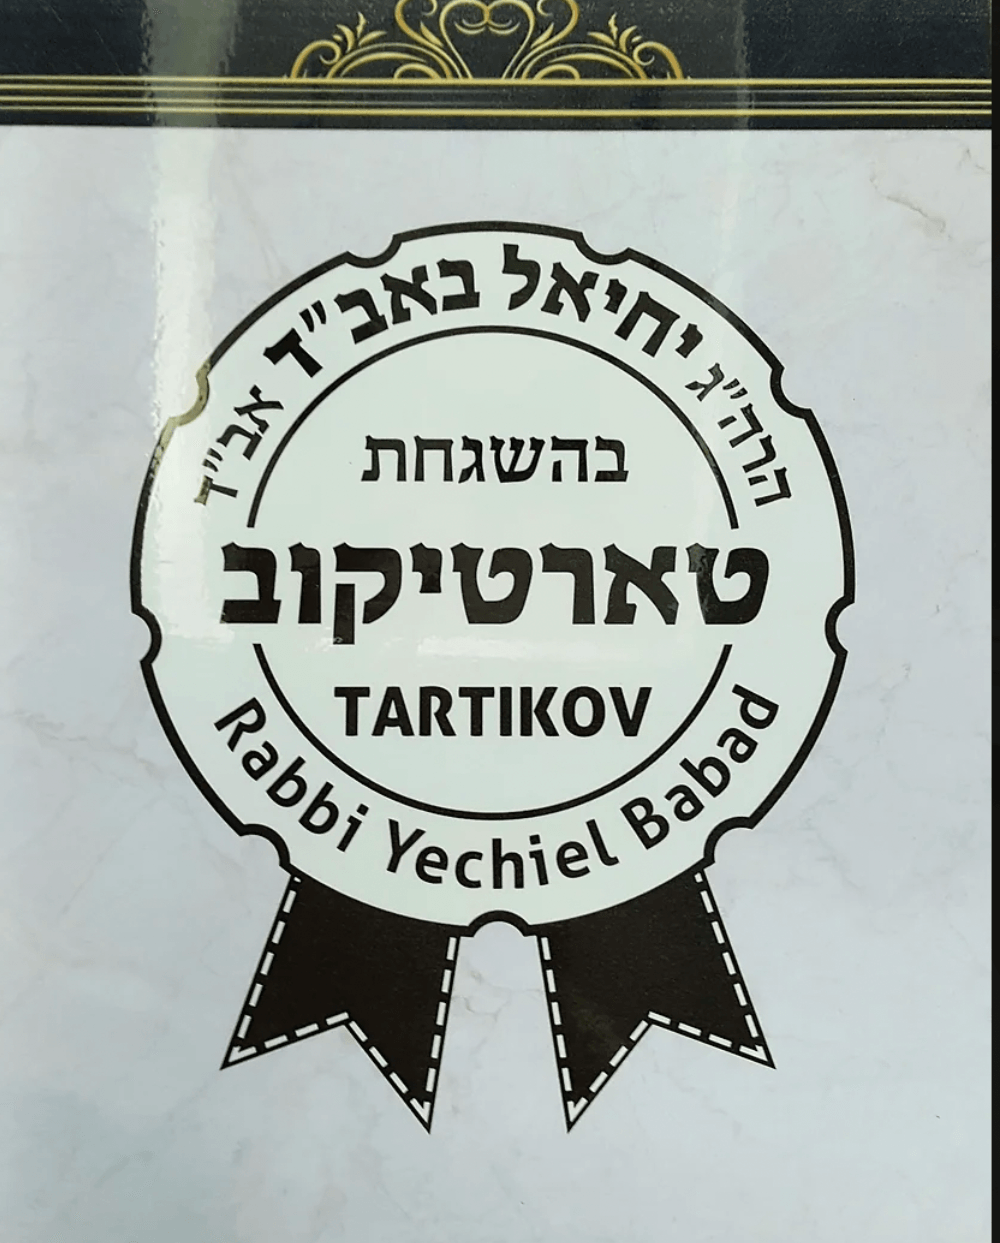 Under the Supervision of Rabbi Yechiel Babad.